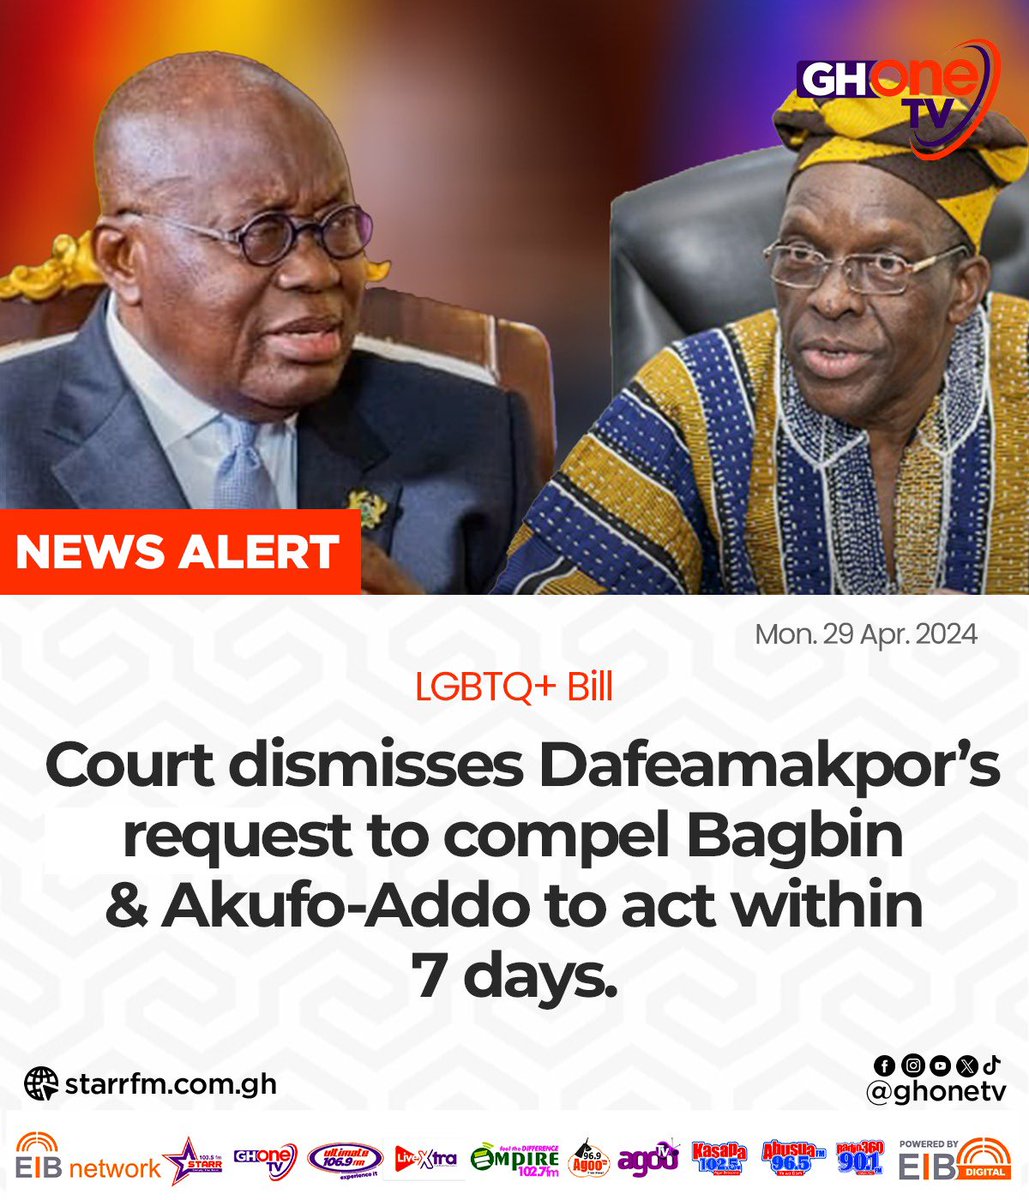 Court dismisses Dafeamakpor’s request #kasapanews